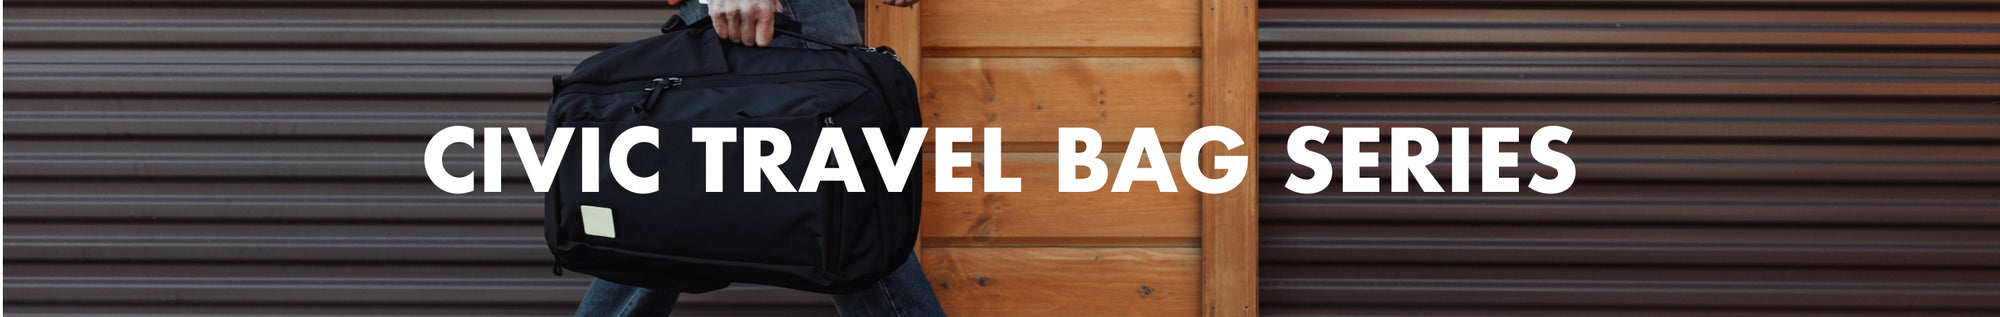 CIVIC Travel Bag Series